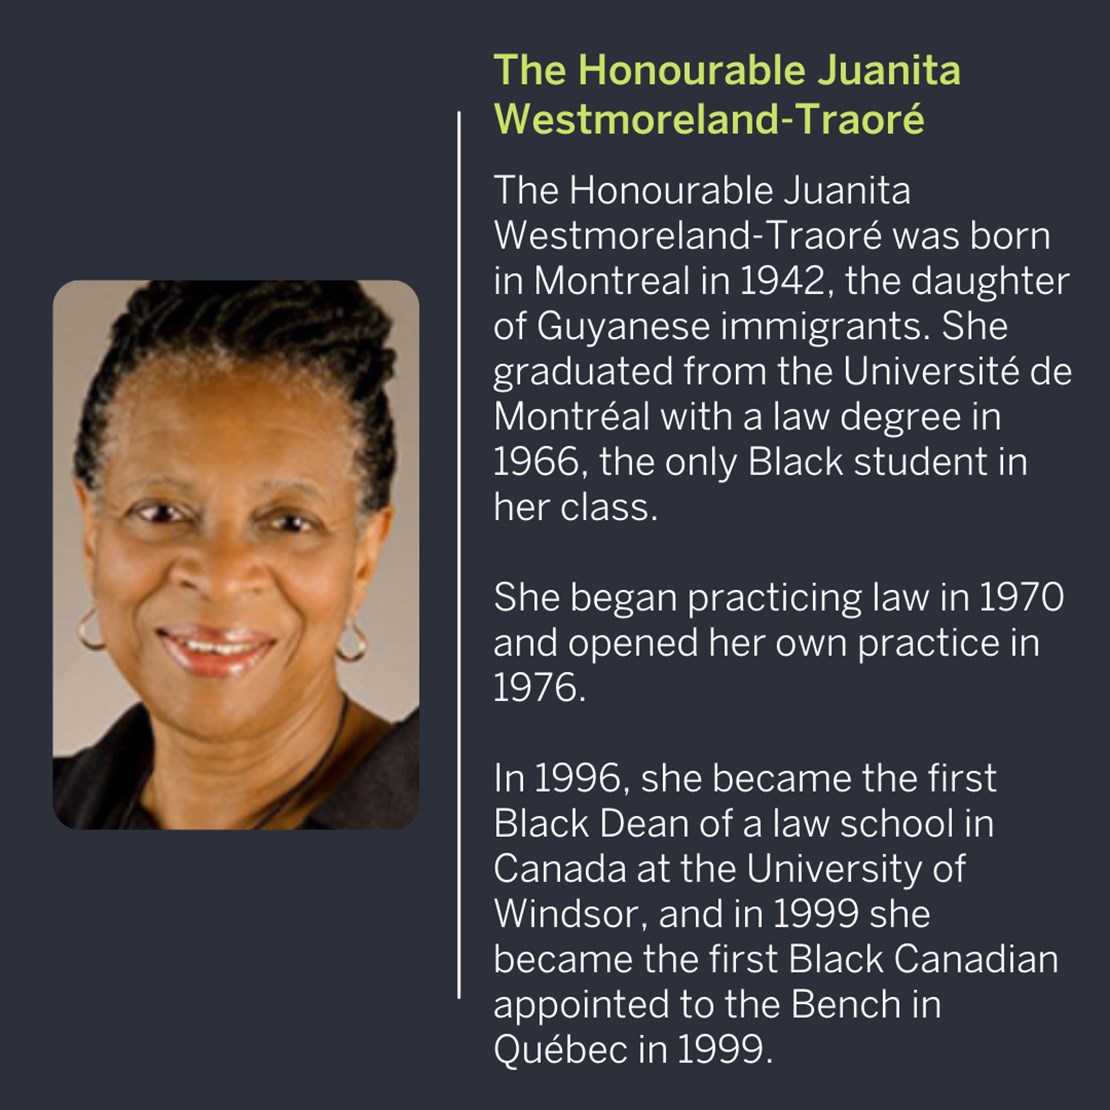 The Honourable Juanita Westmoreland-Traore